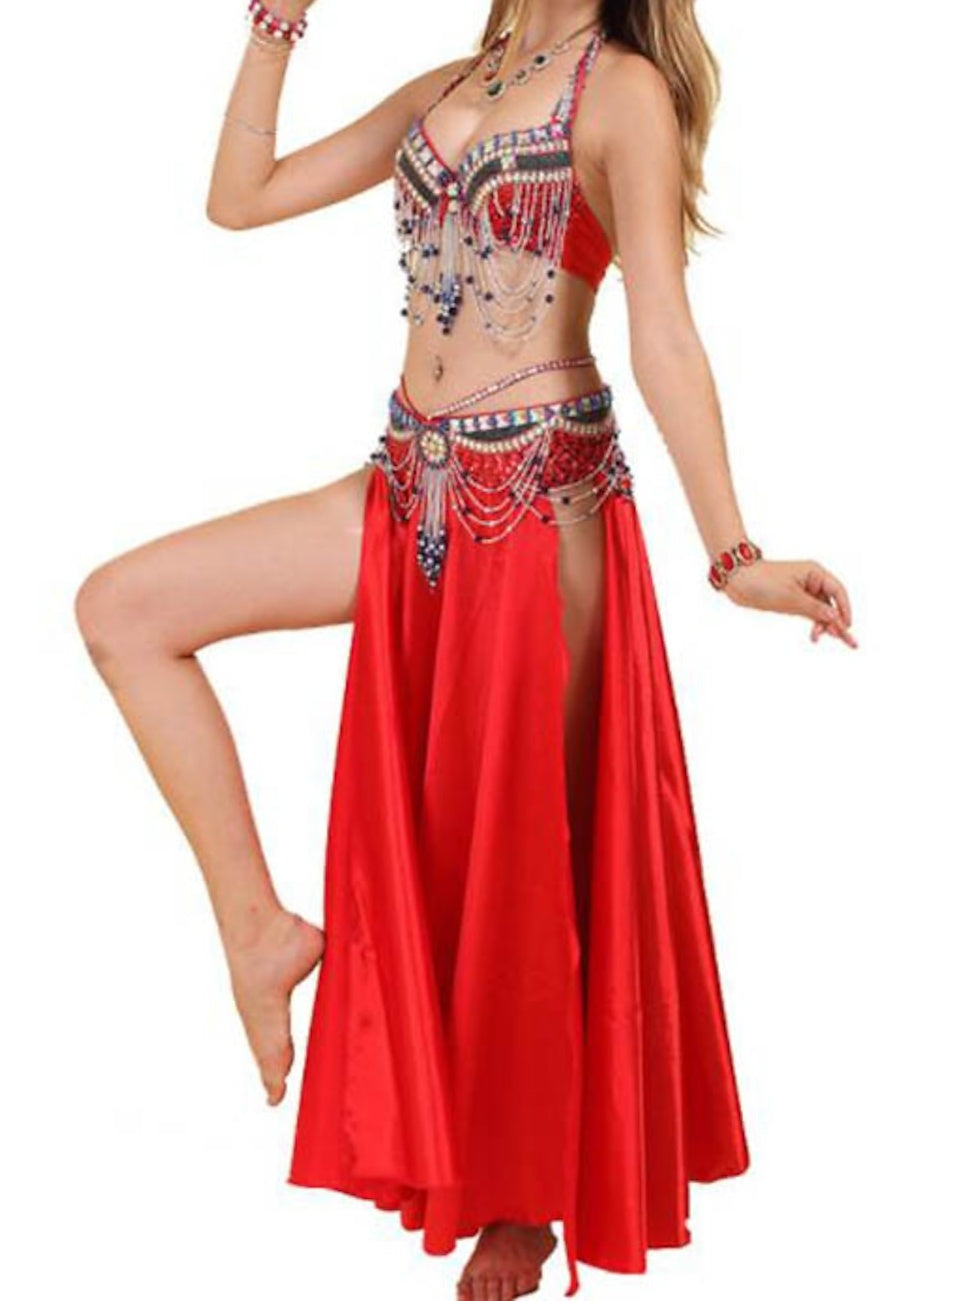 Belly Sleeveless Dance Dress Crystals / Rhinestones Paillette Women's Training Performance